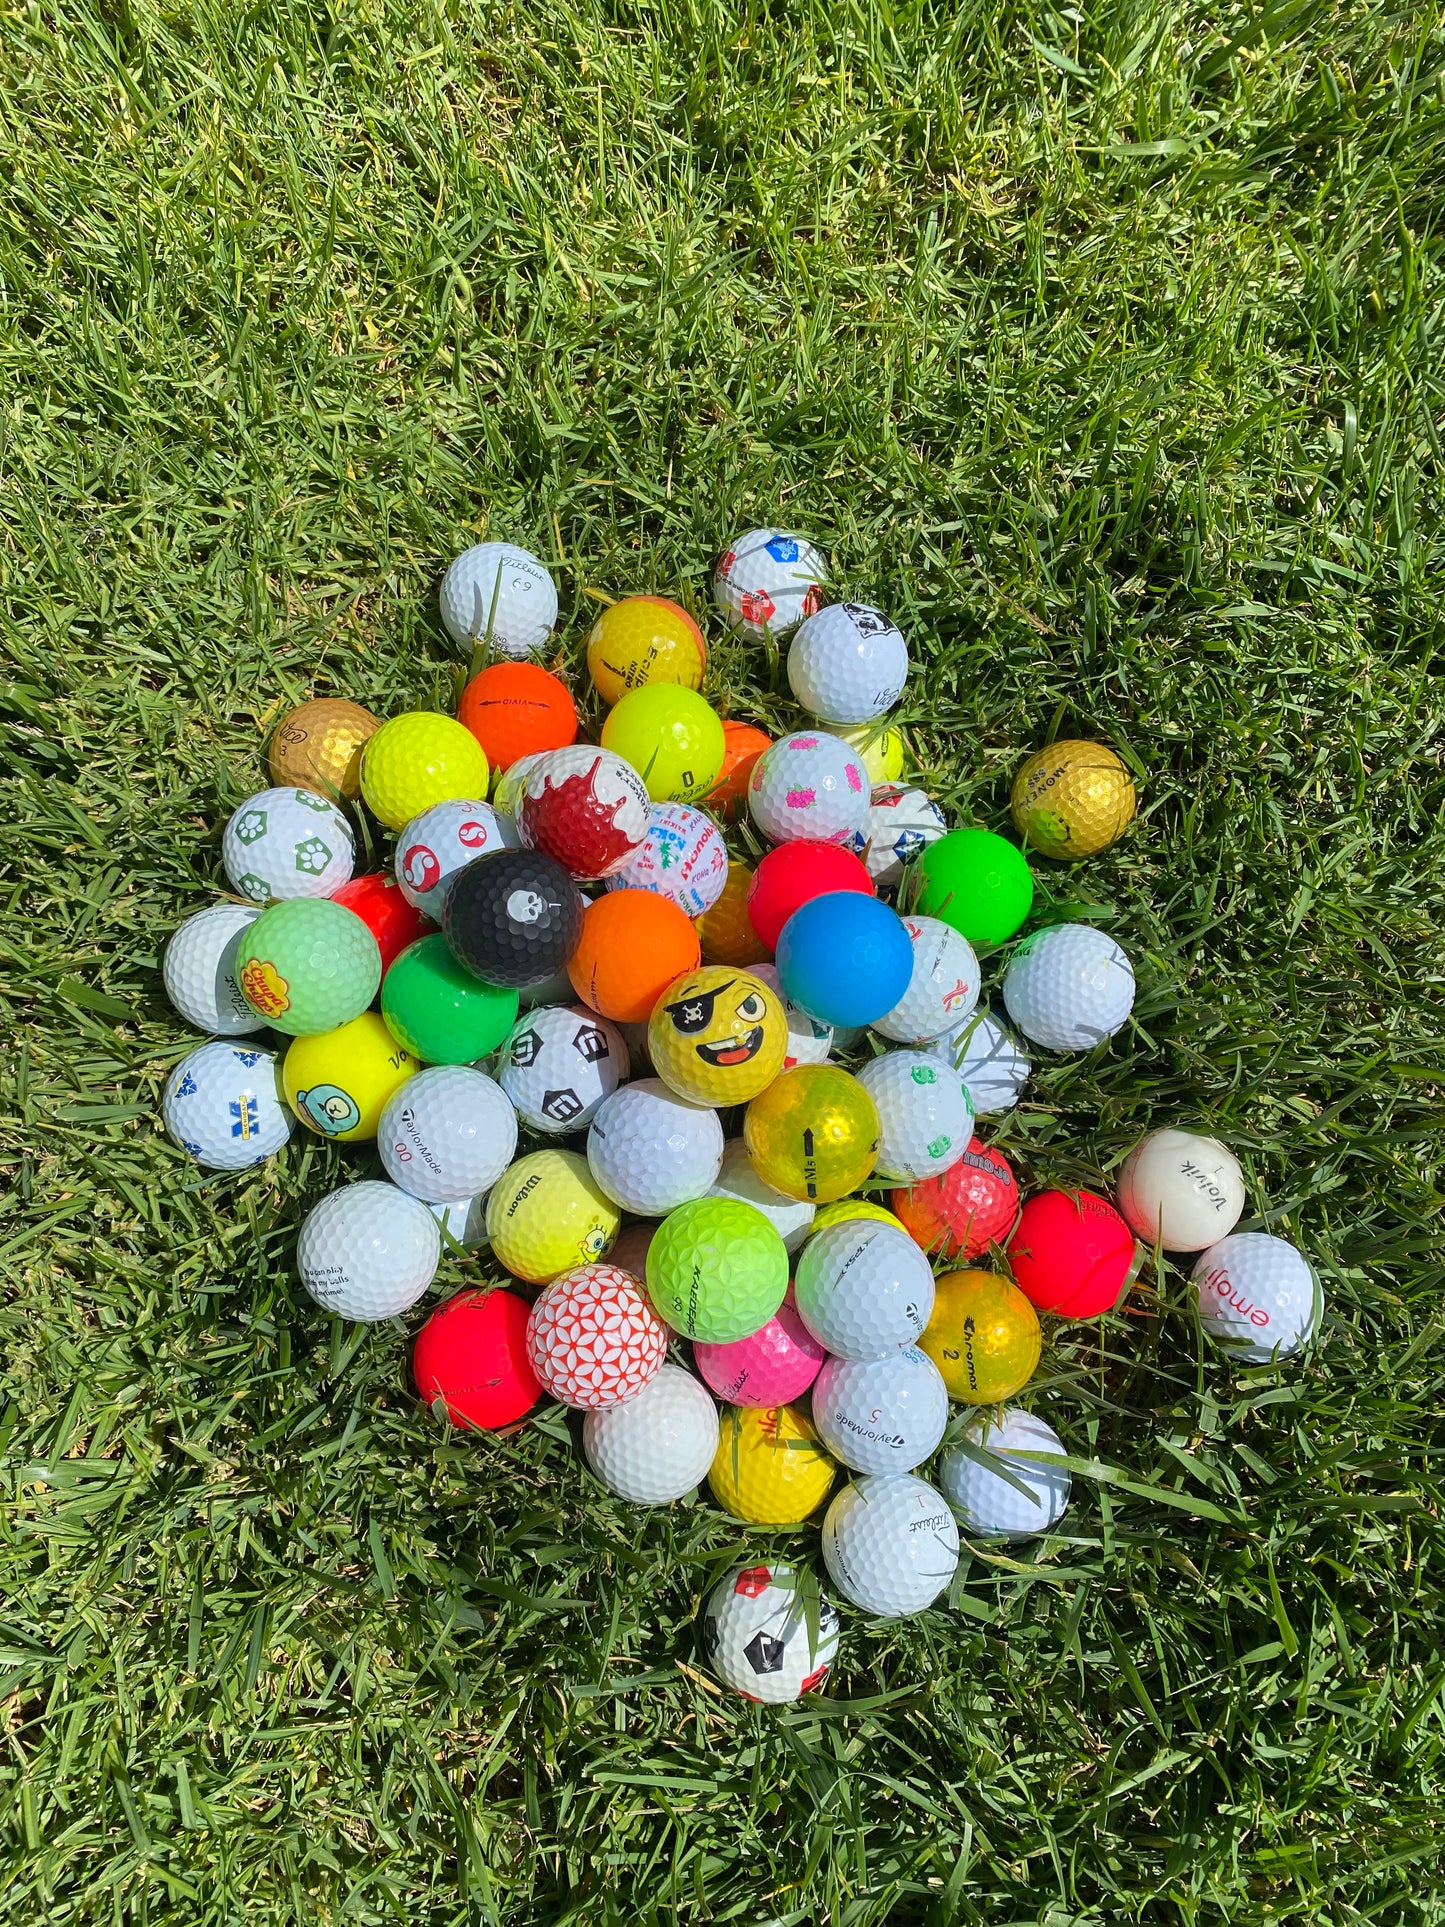 15 Golf Ball Mystery Box